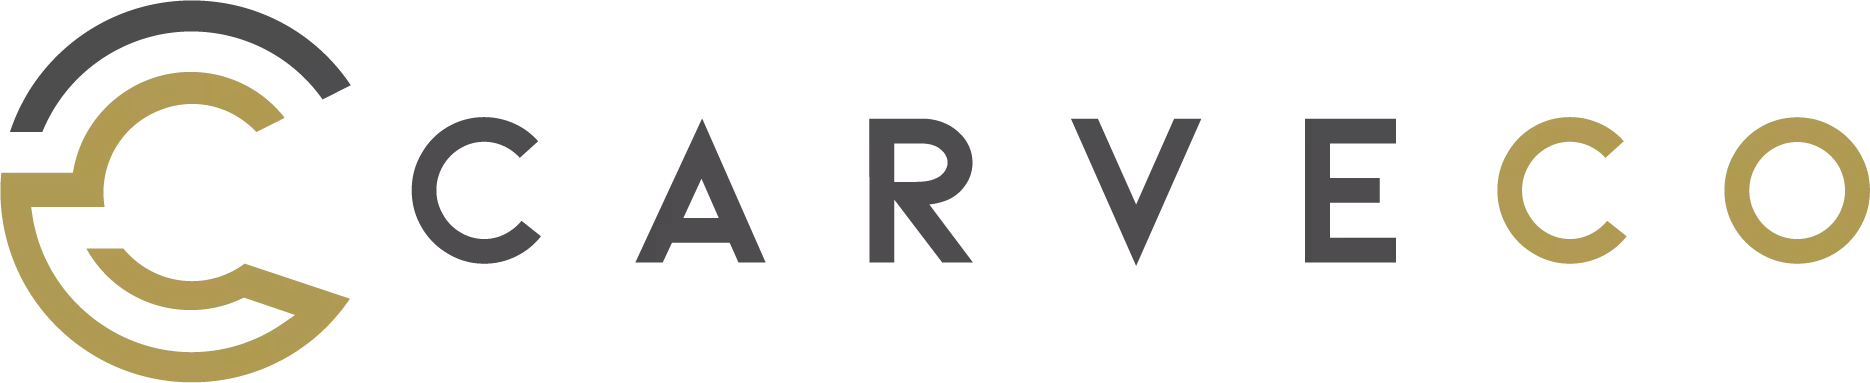 Carveco Logo